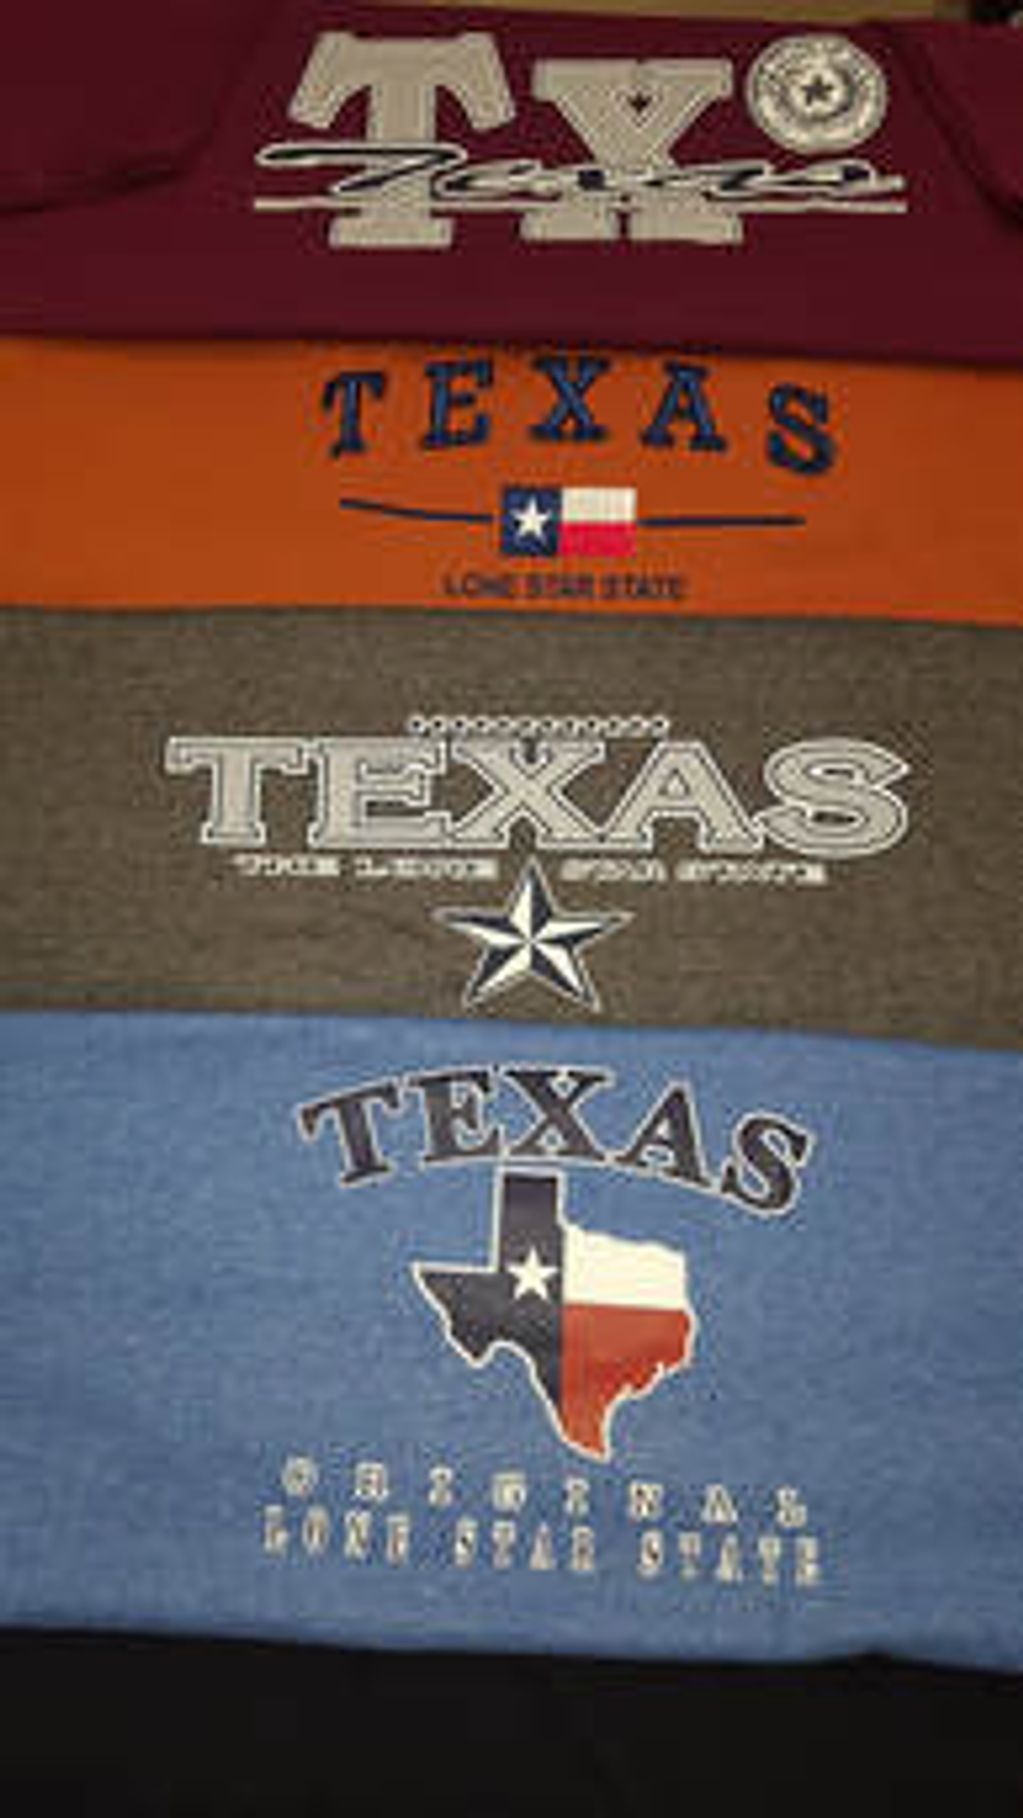 T-14 TX Seal Maroon
Texas Embroidery
T-16 Texas Star
T-39 Original Texas 
(Top to Bottom) 